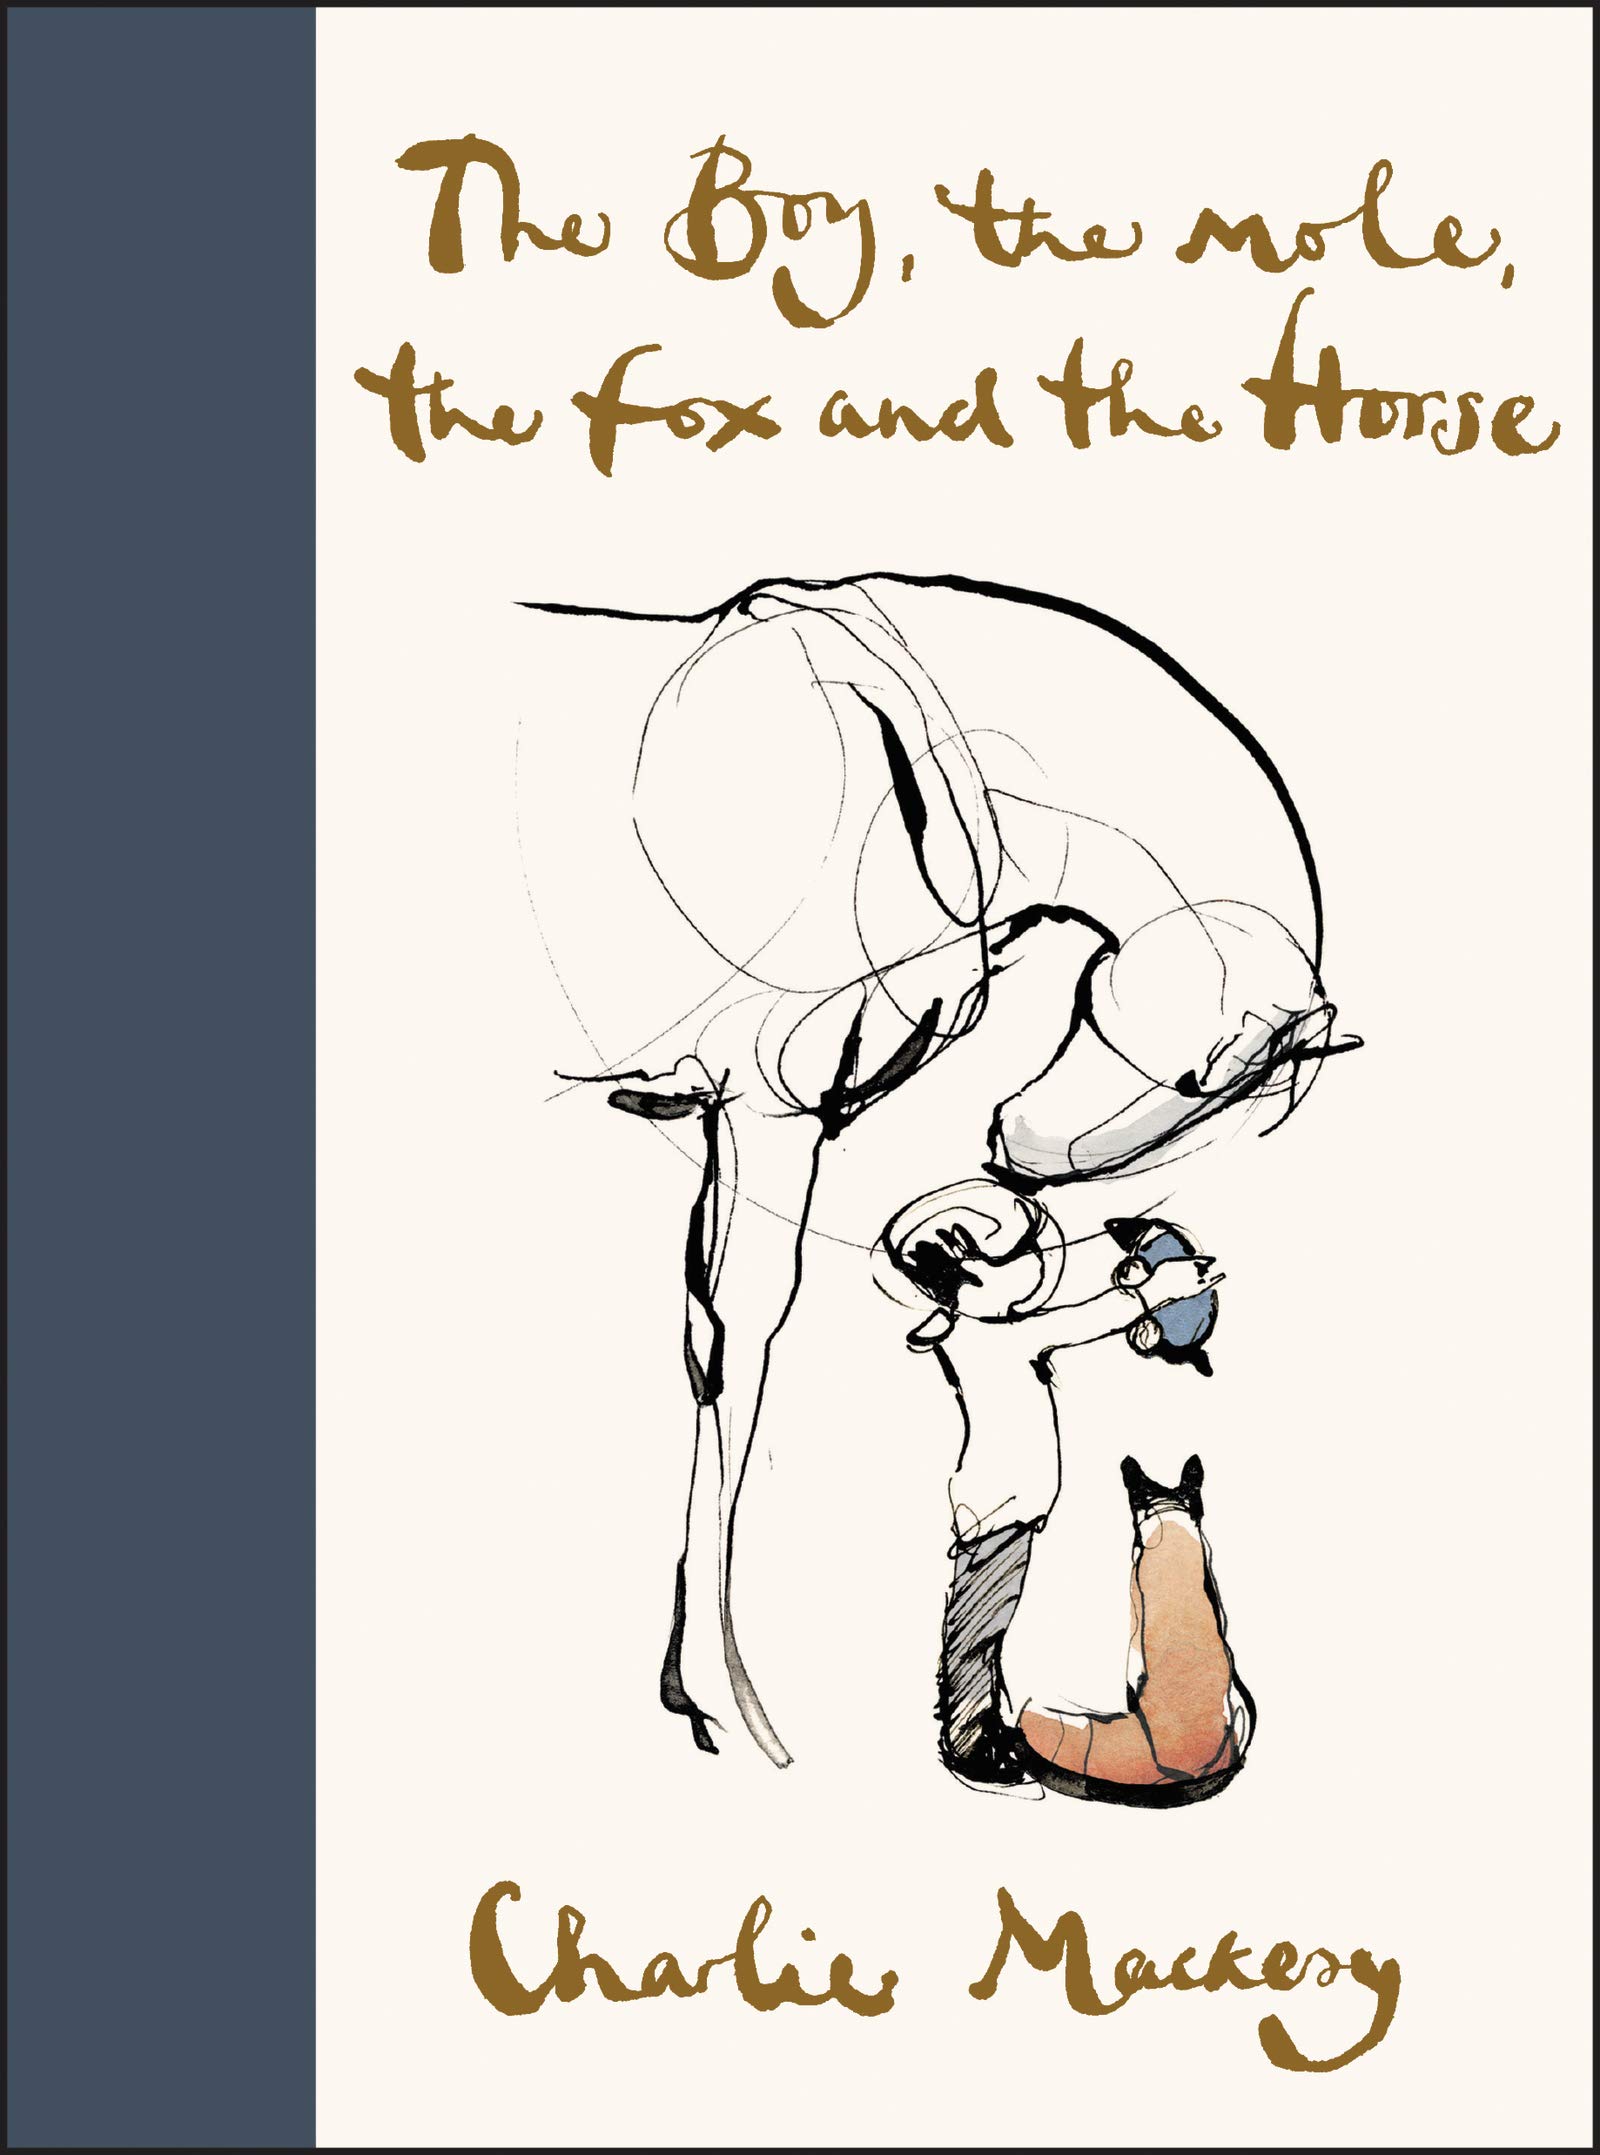 The Boy the Mole the Fox and the house by Charlie Mackesy